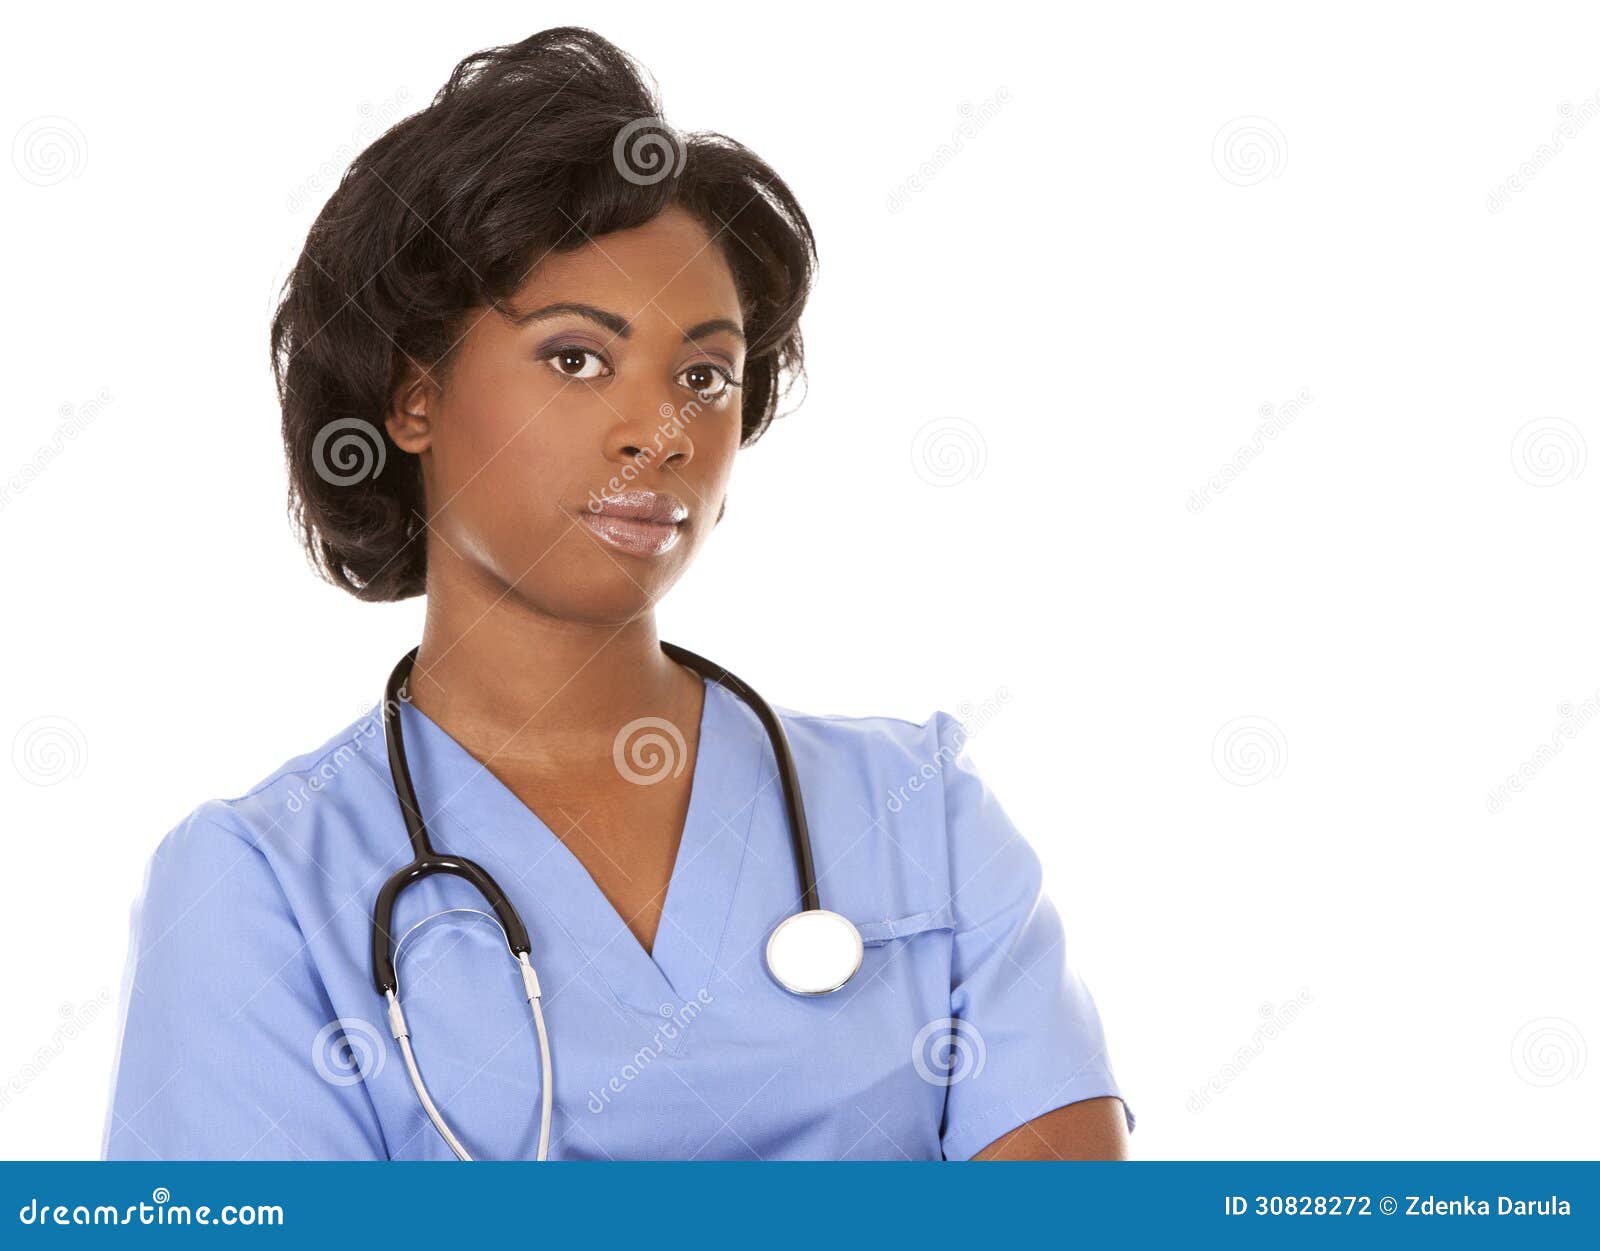 Black medical nurse stock photo. Image of healthcare - 30828272